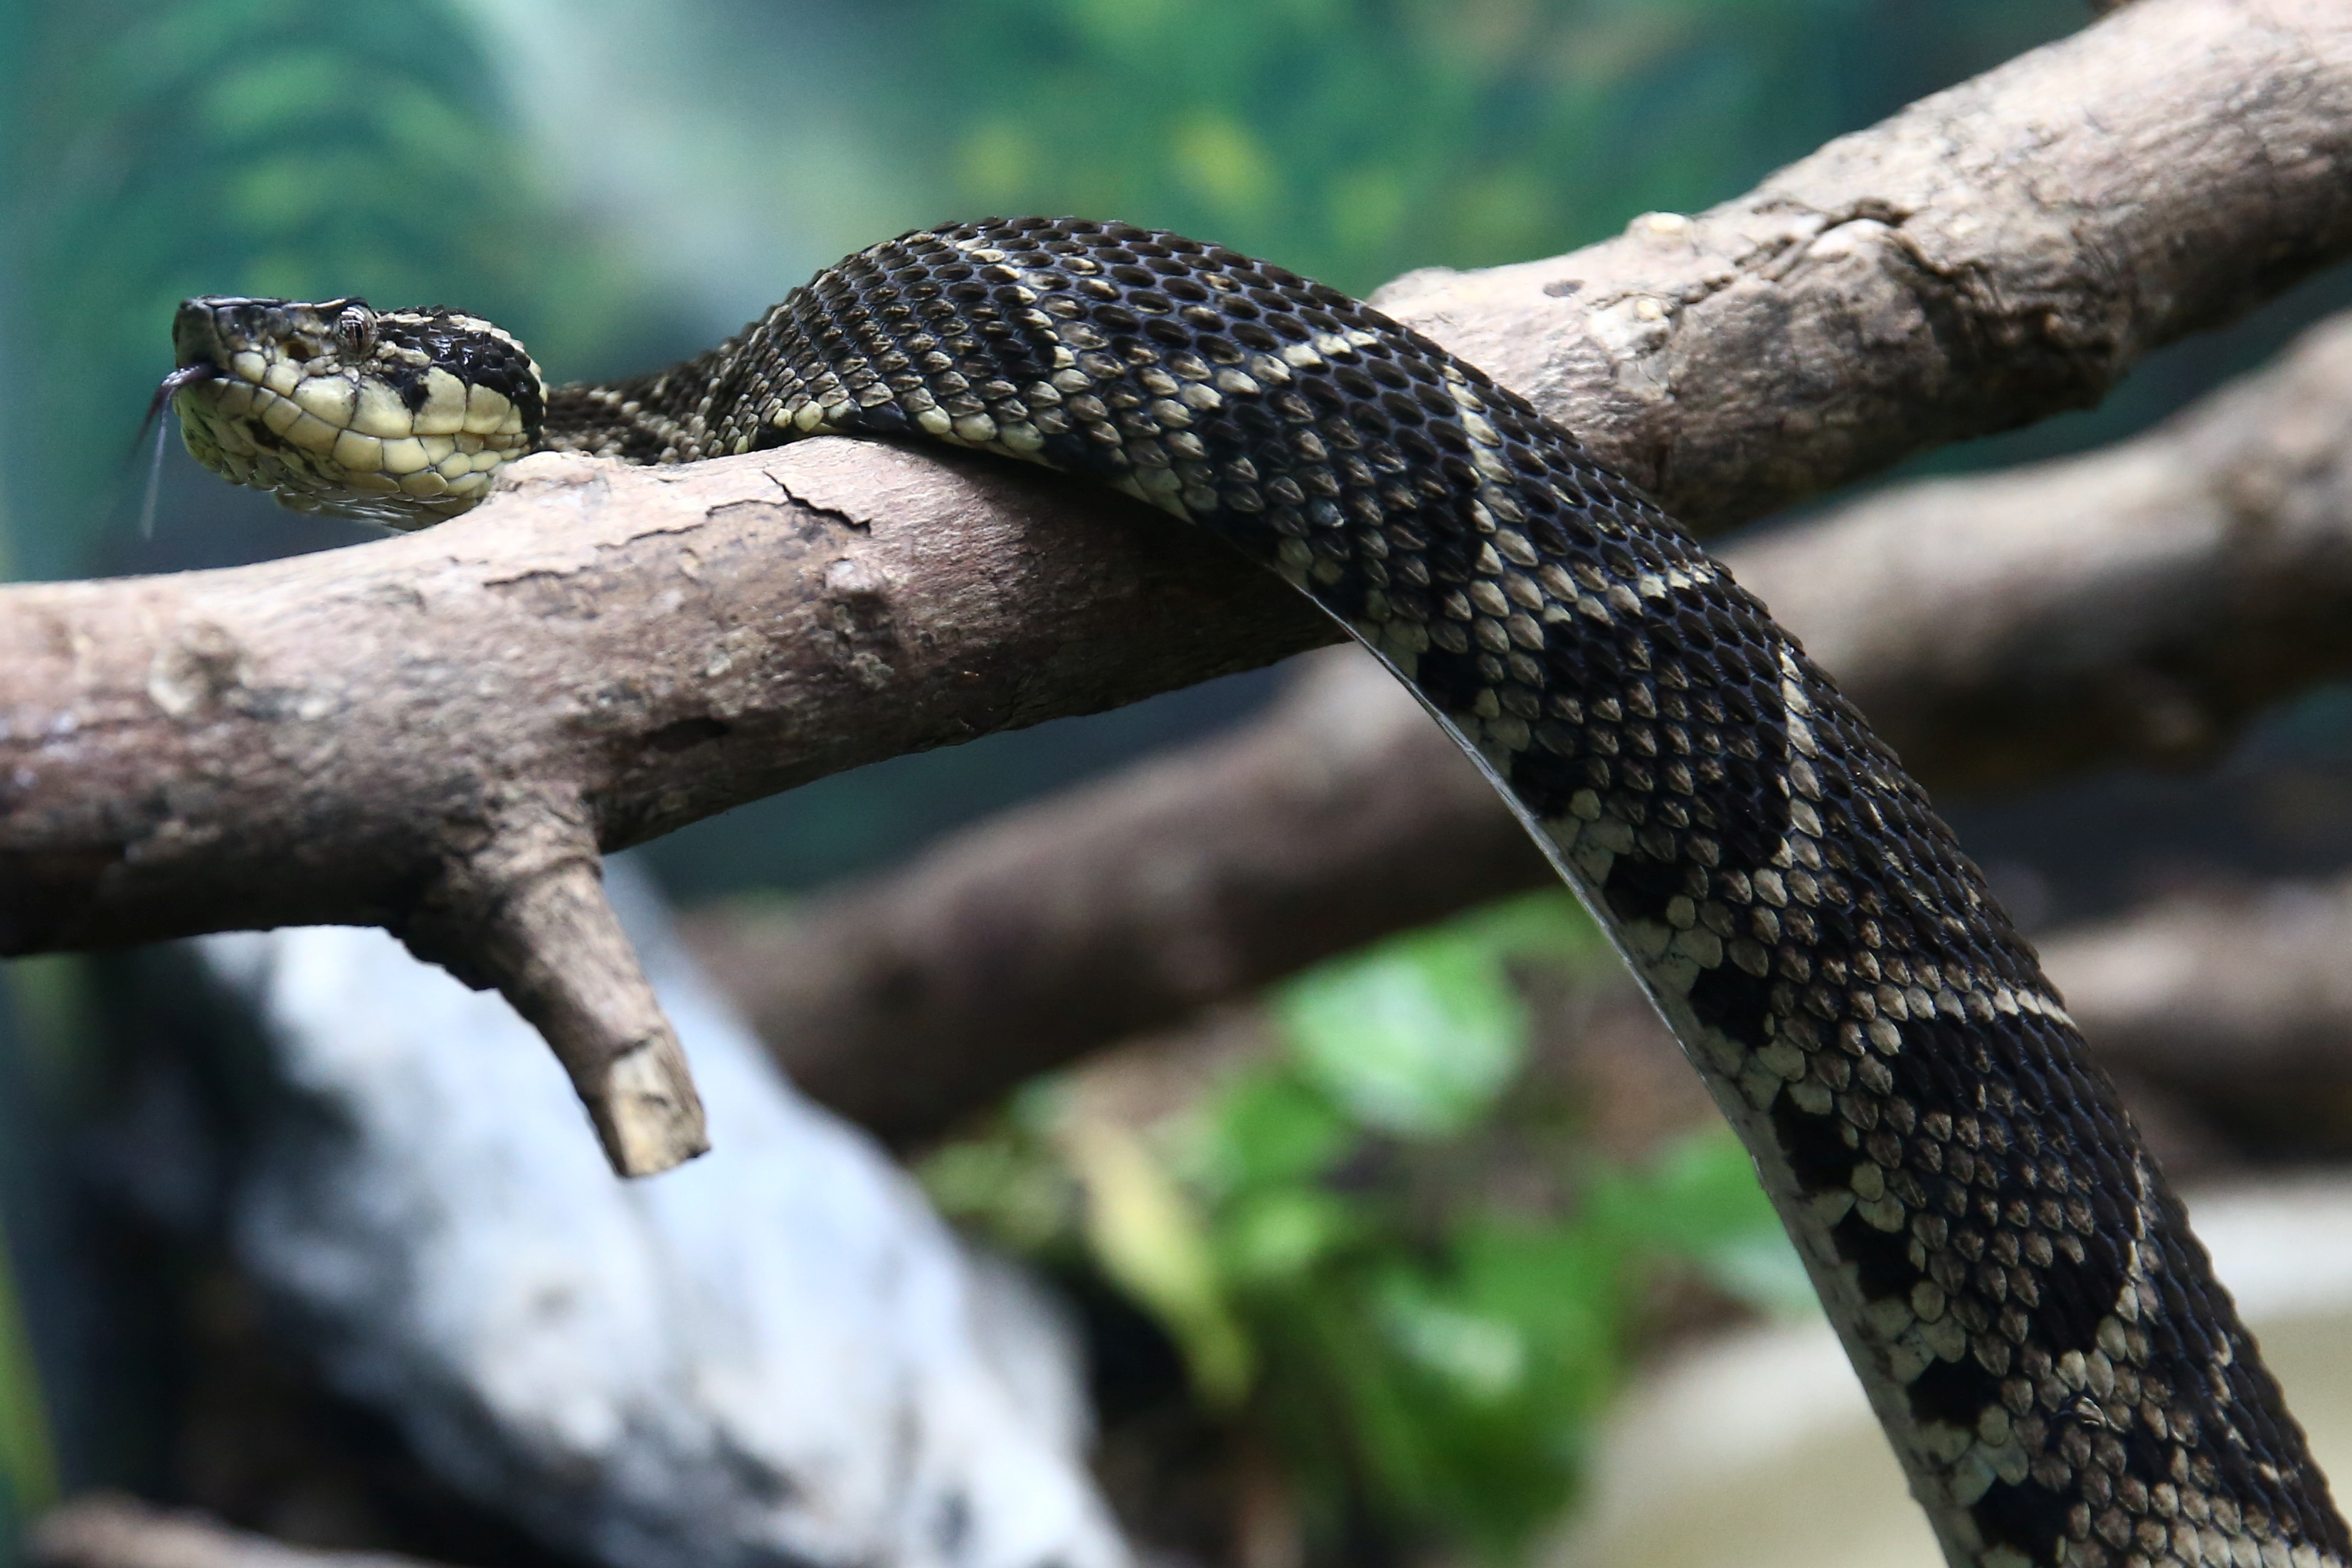 Brazilian study uses snake venom against COVID-19